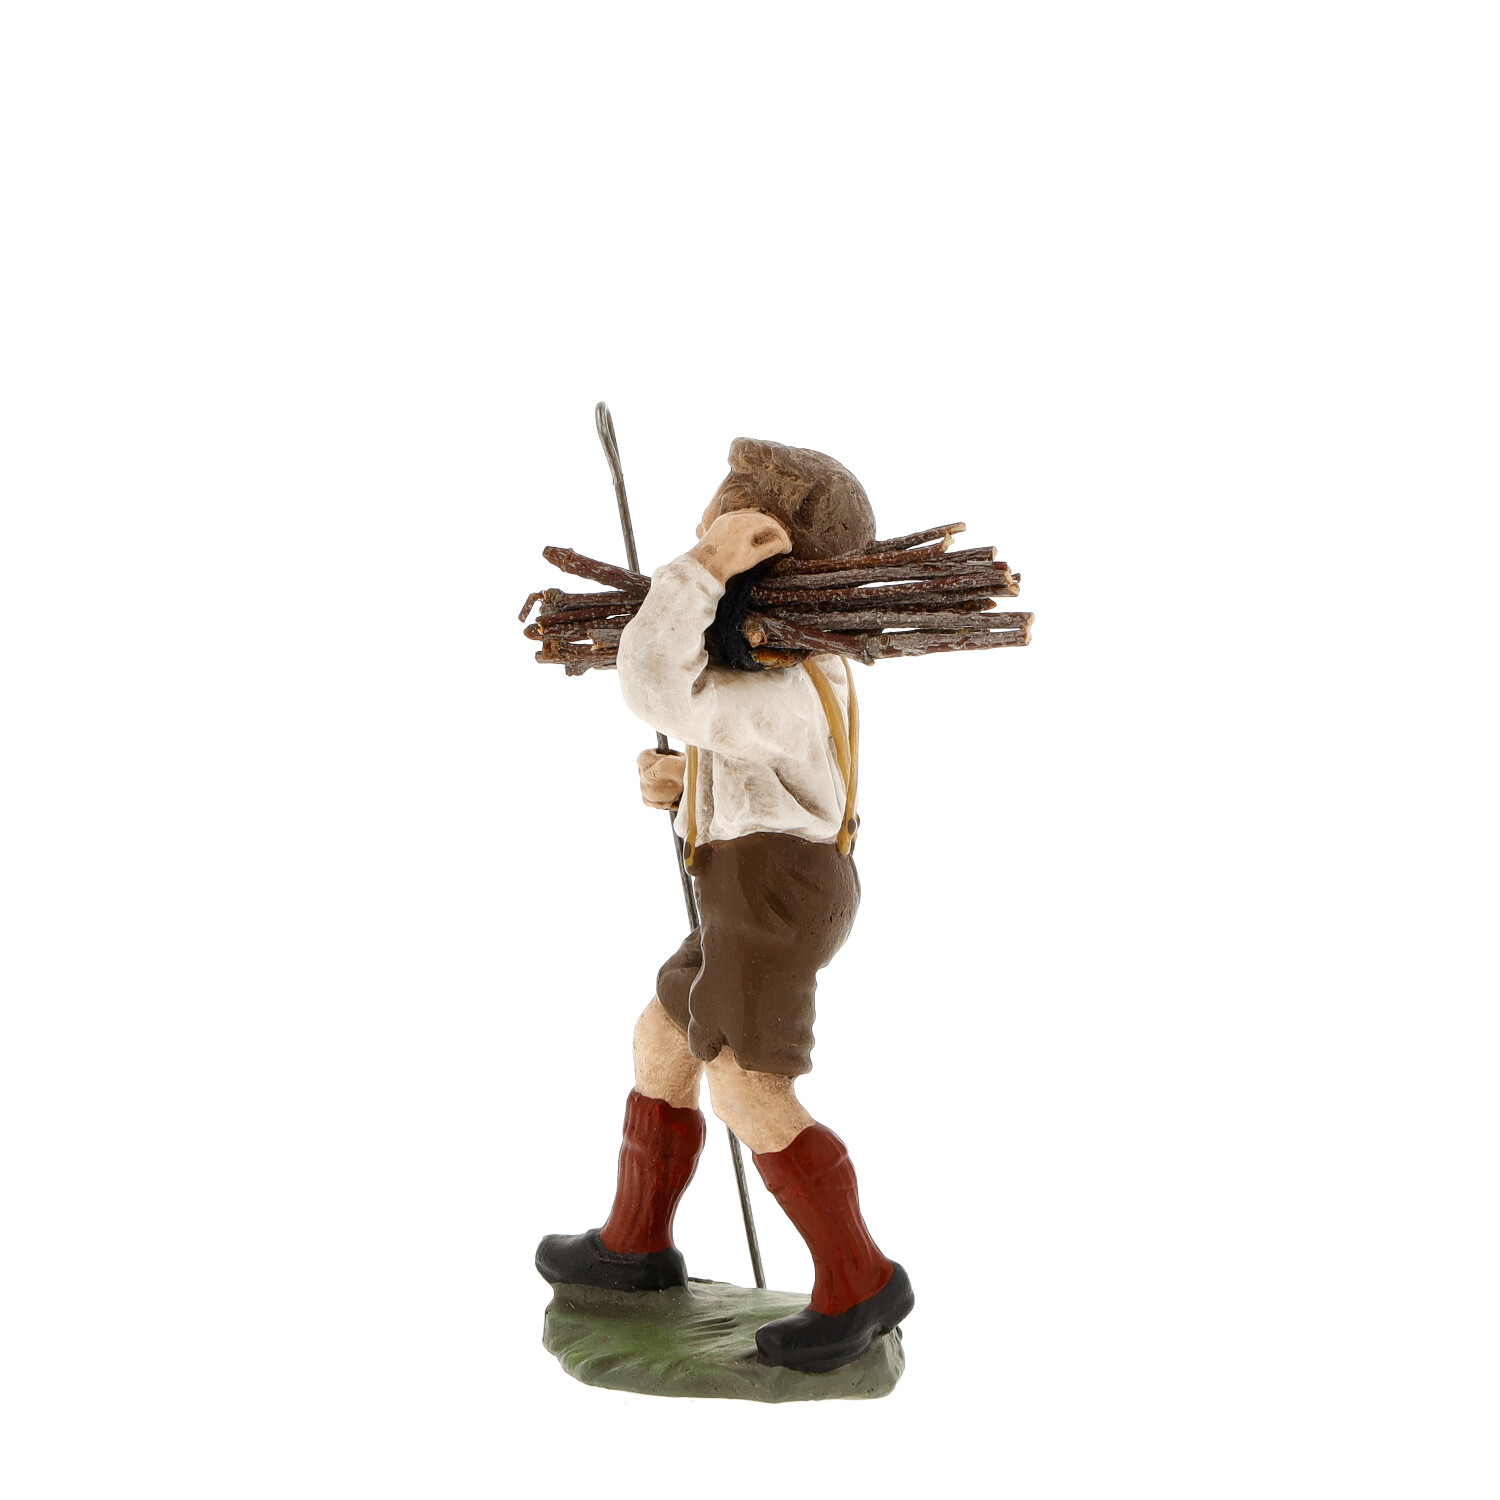 Shepherd boy with timber - Marolin Nativity figure - made in Germany